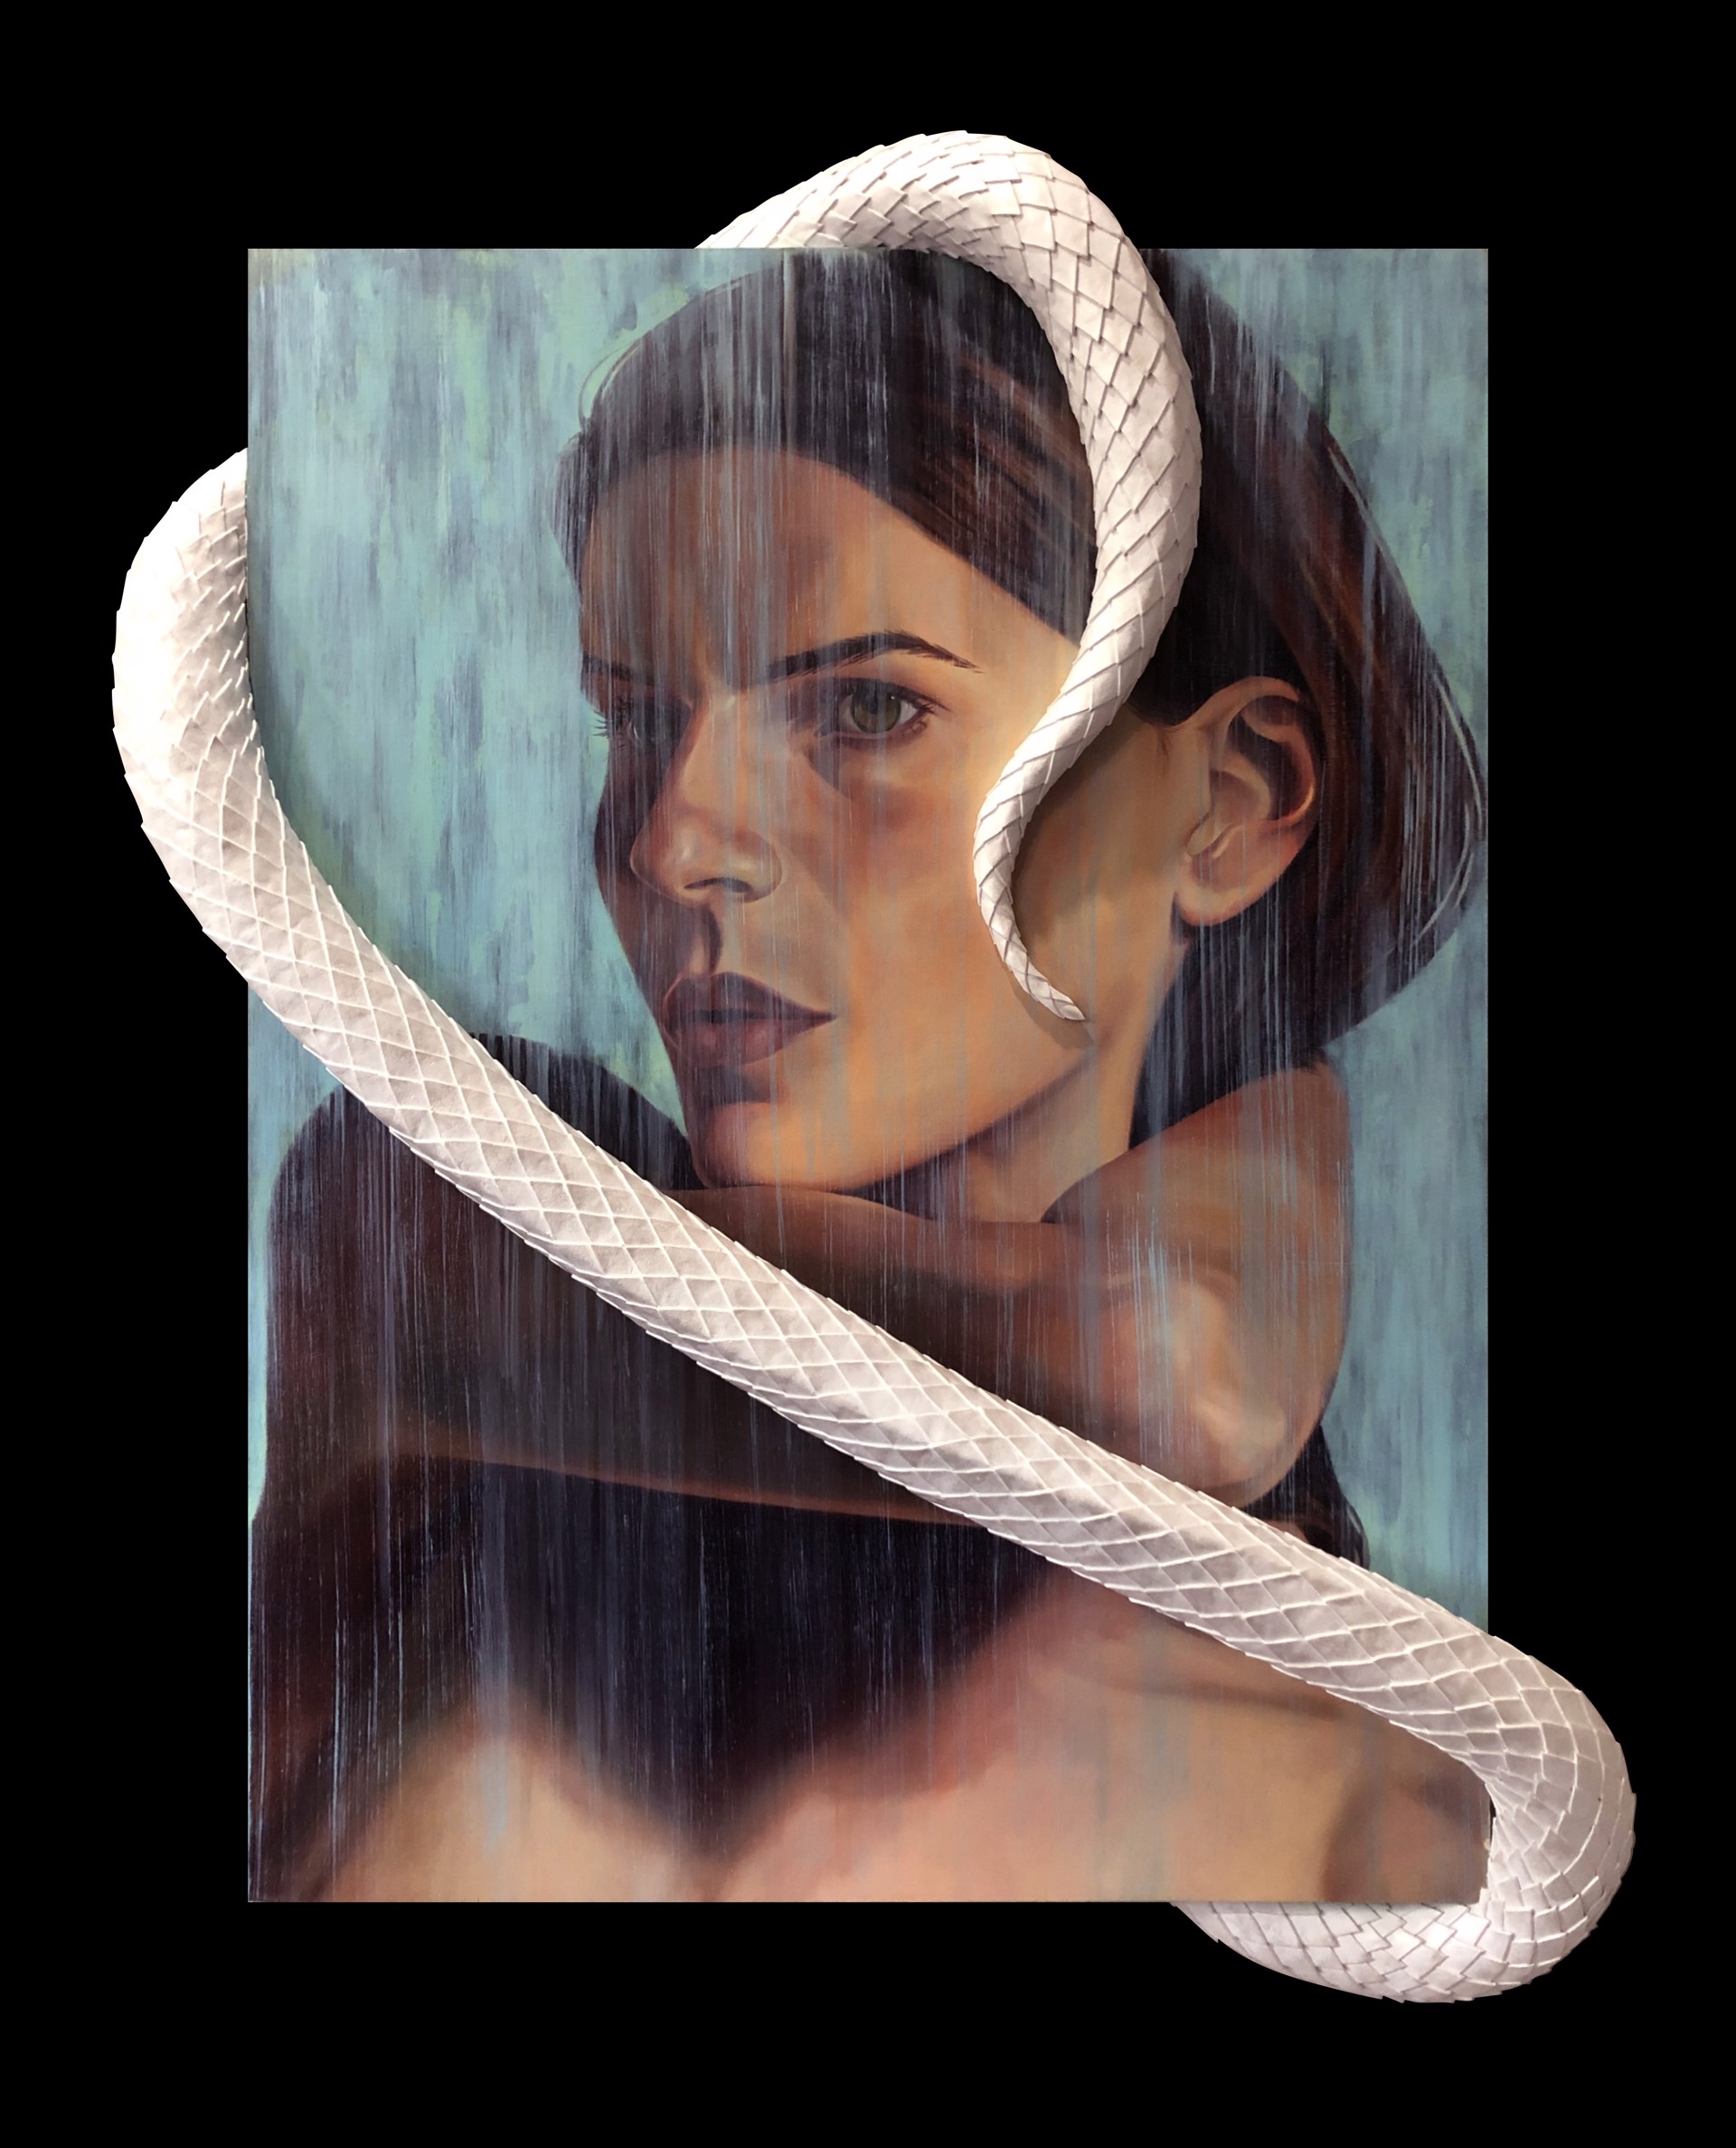 Swimming With Medusa 5 by Lisa Matrundola